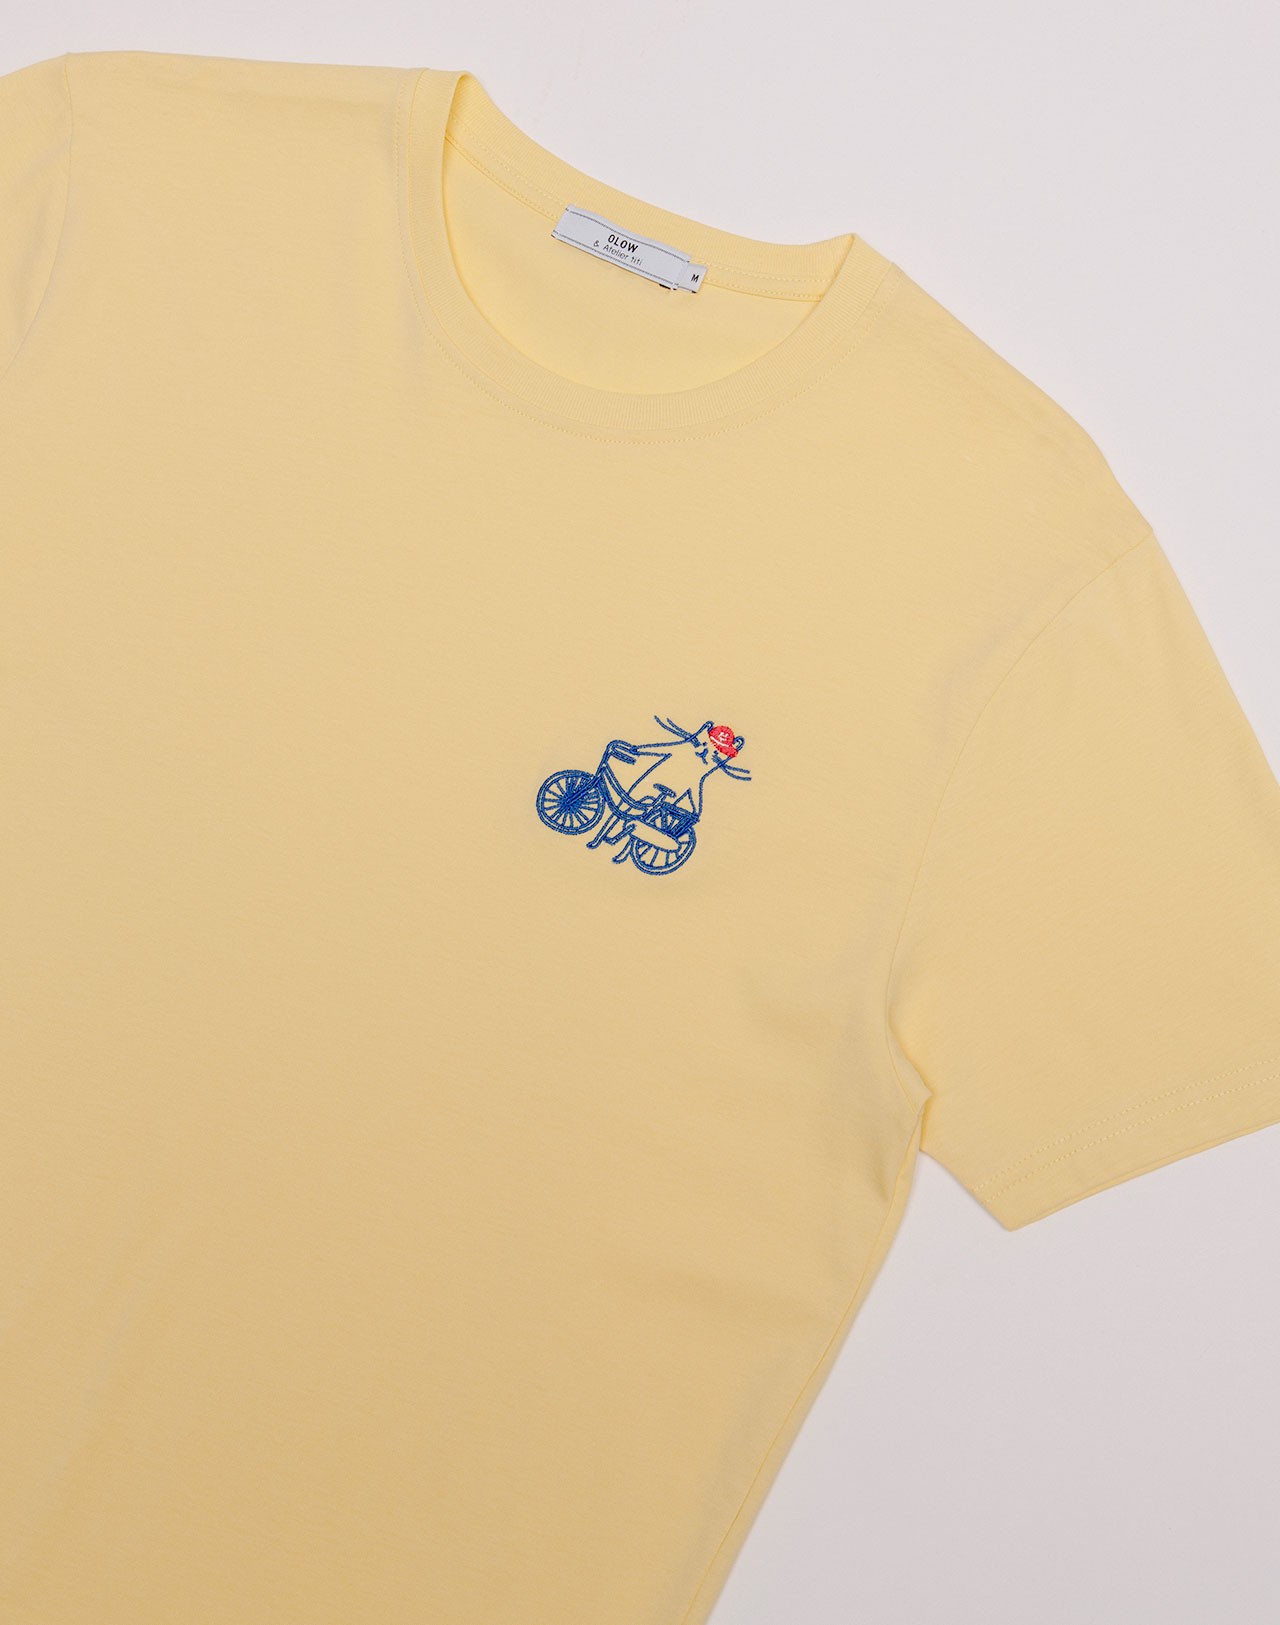 Bicycat t-shirt